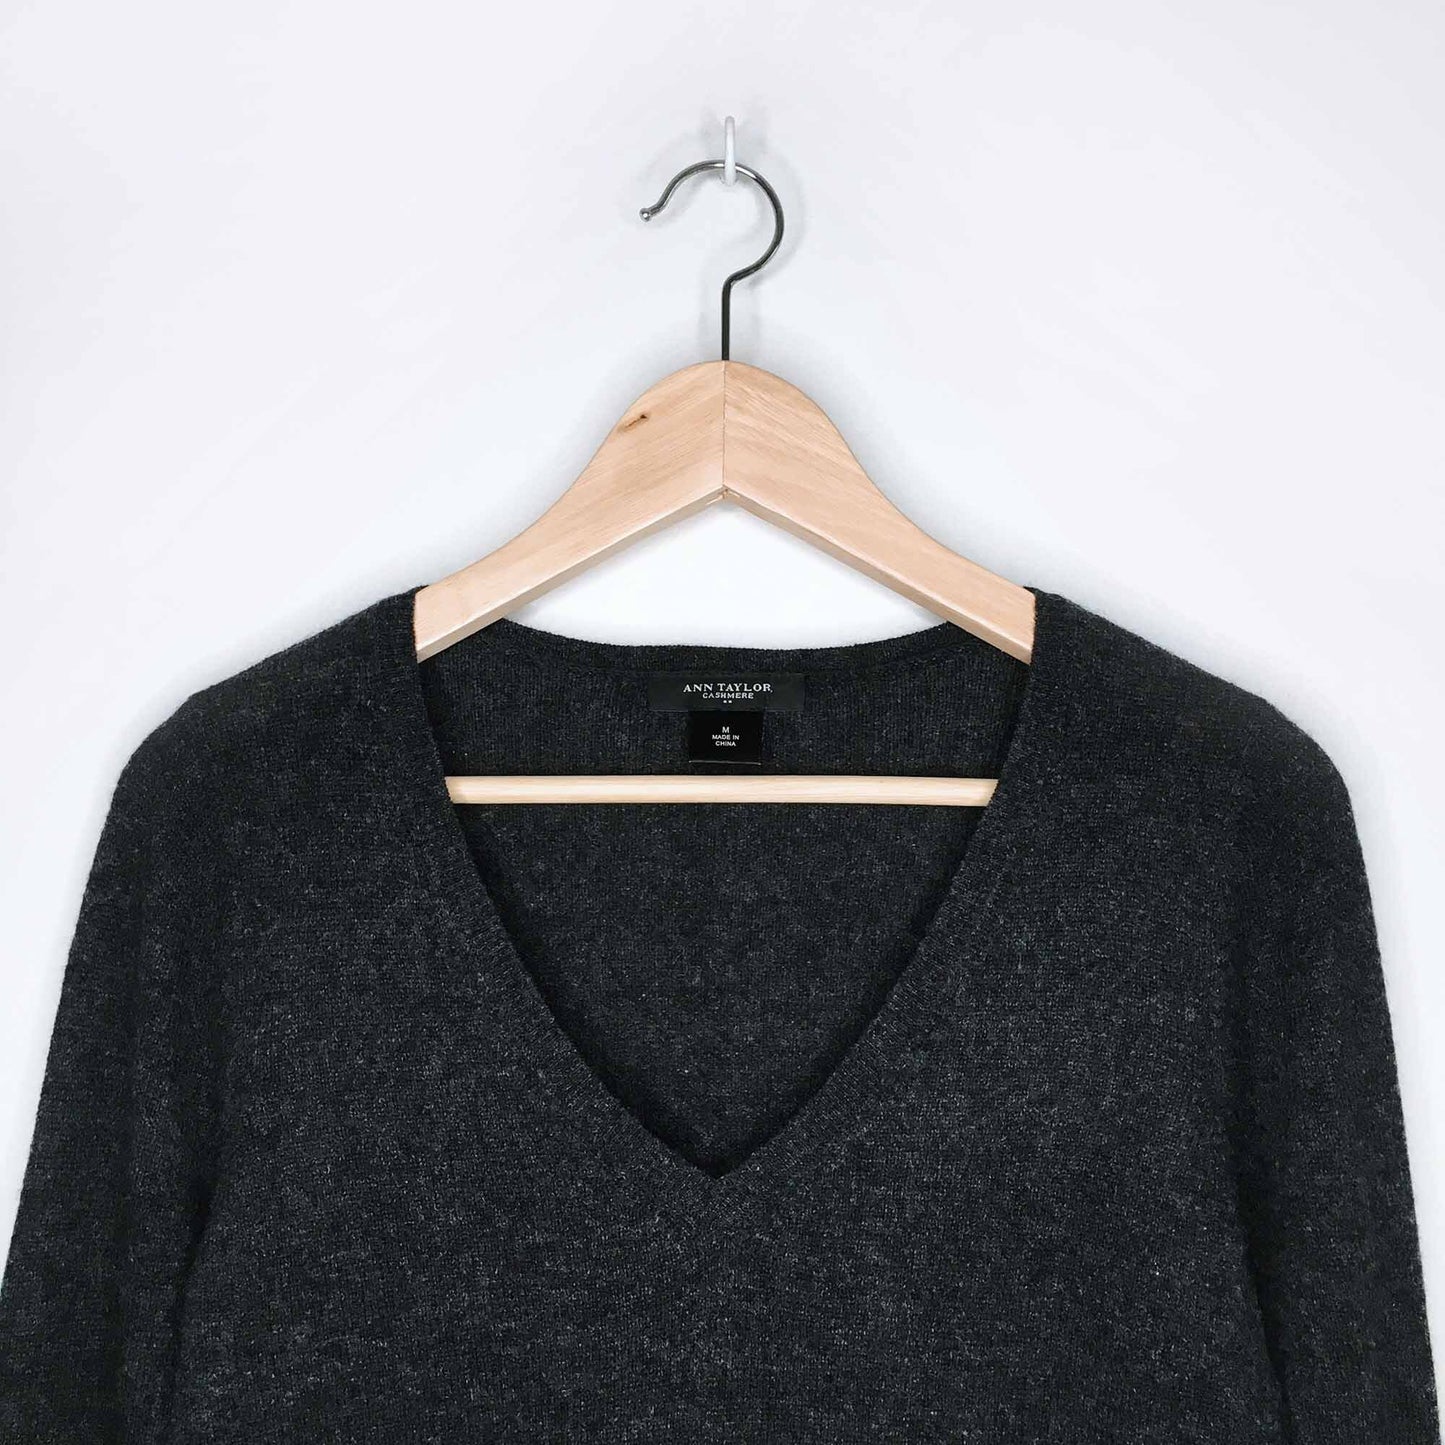 Ann Taylor cashmere v-neck sweater - size Medium